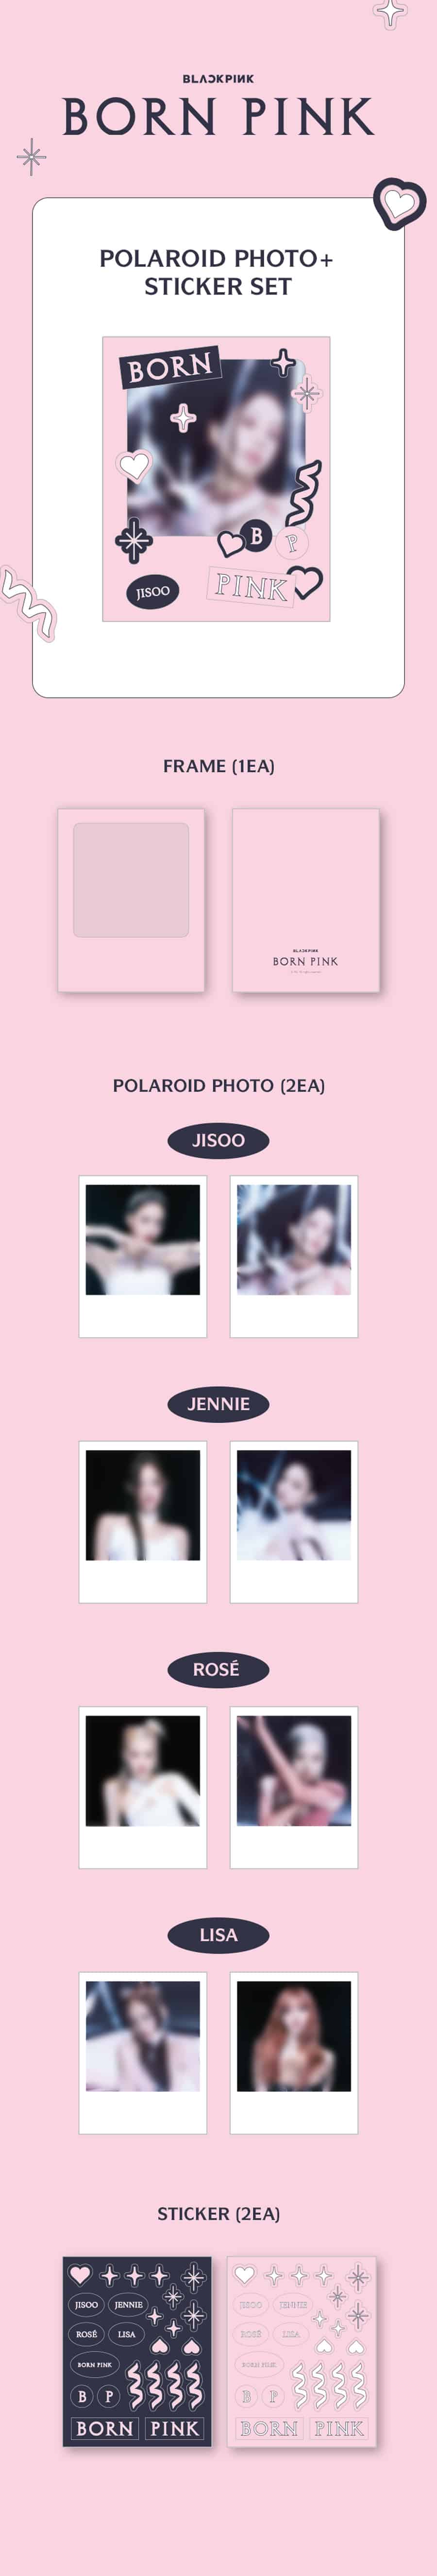 blackpink-born-pink-polaroid-photo-sticker-set-wholesale